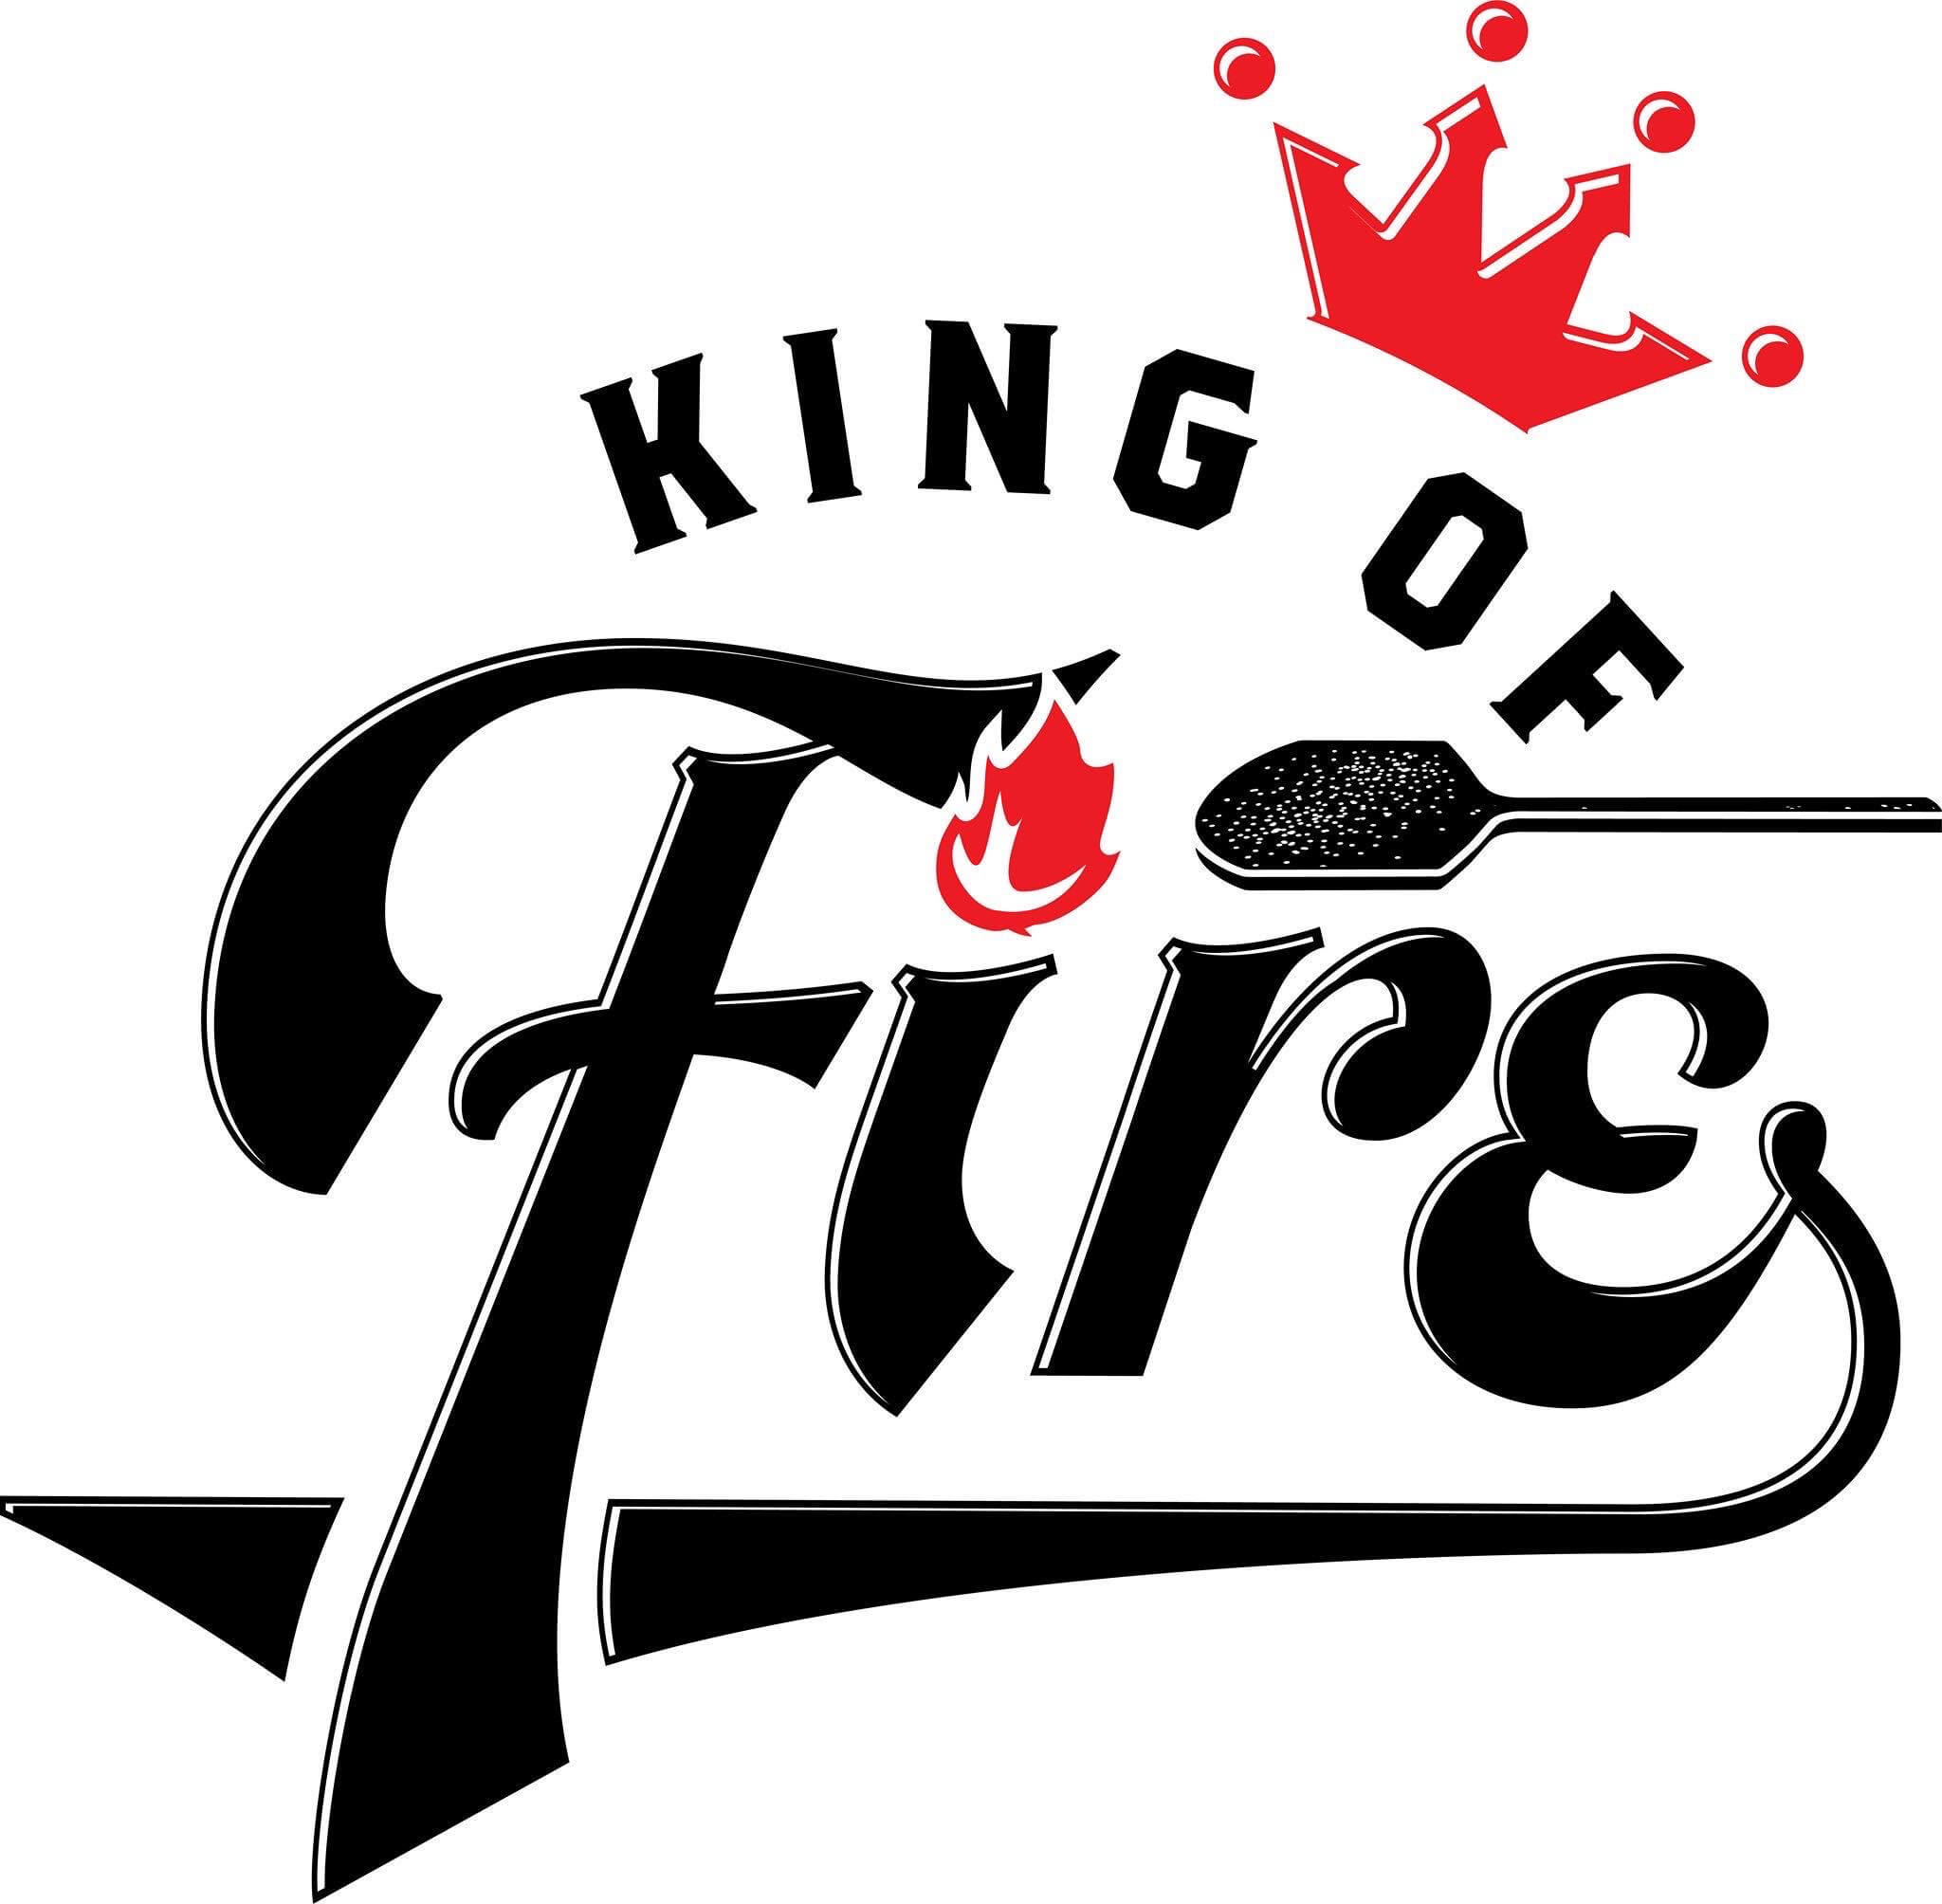 King of Fire logo